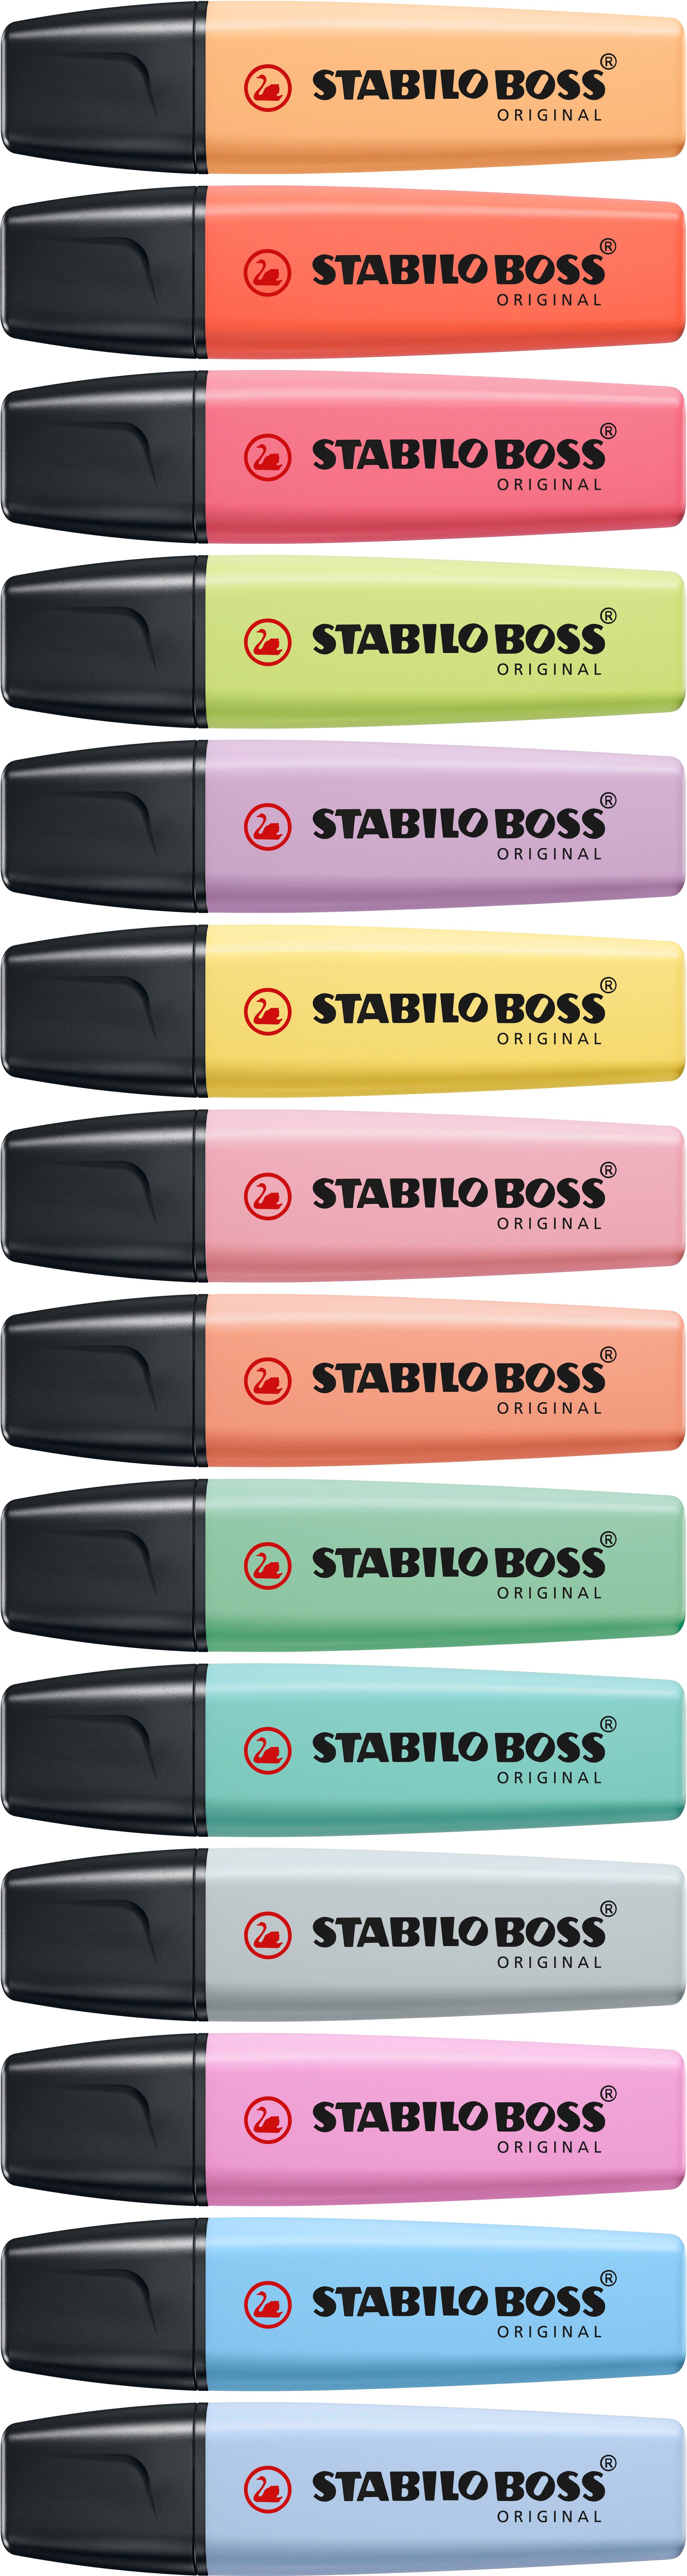 Stabilo Boss Original Highlighters 23 Color Deskset